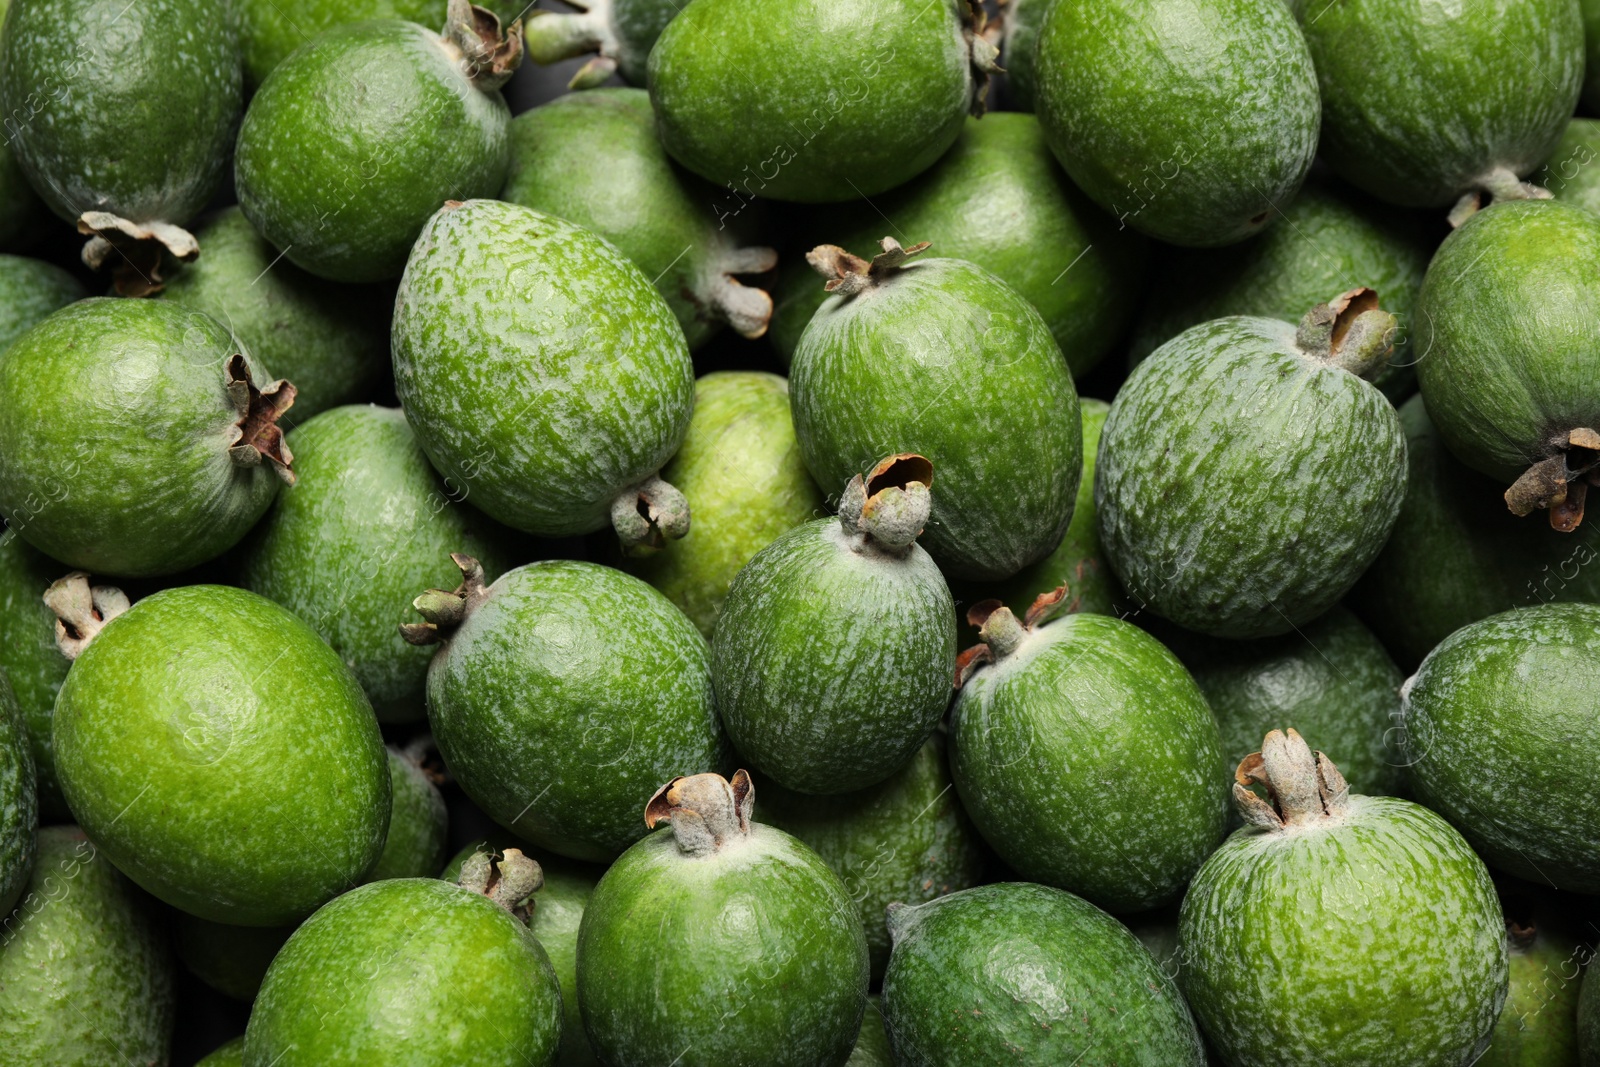 Photo of Fresh green feijoa fruits as background, closeup